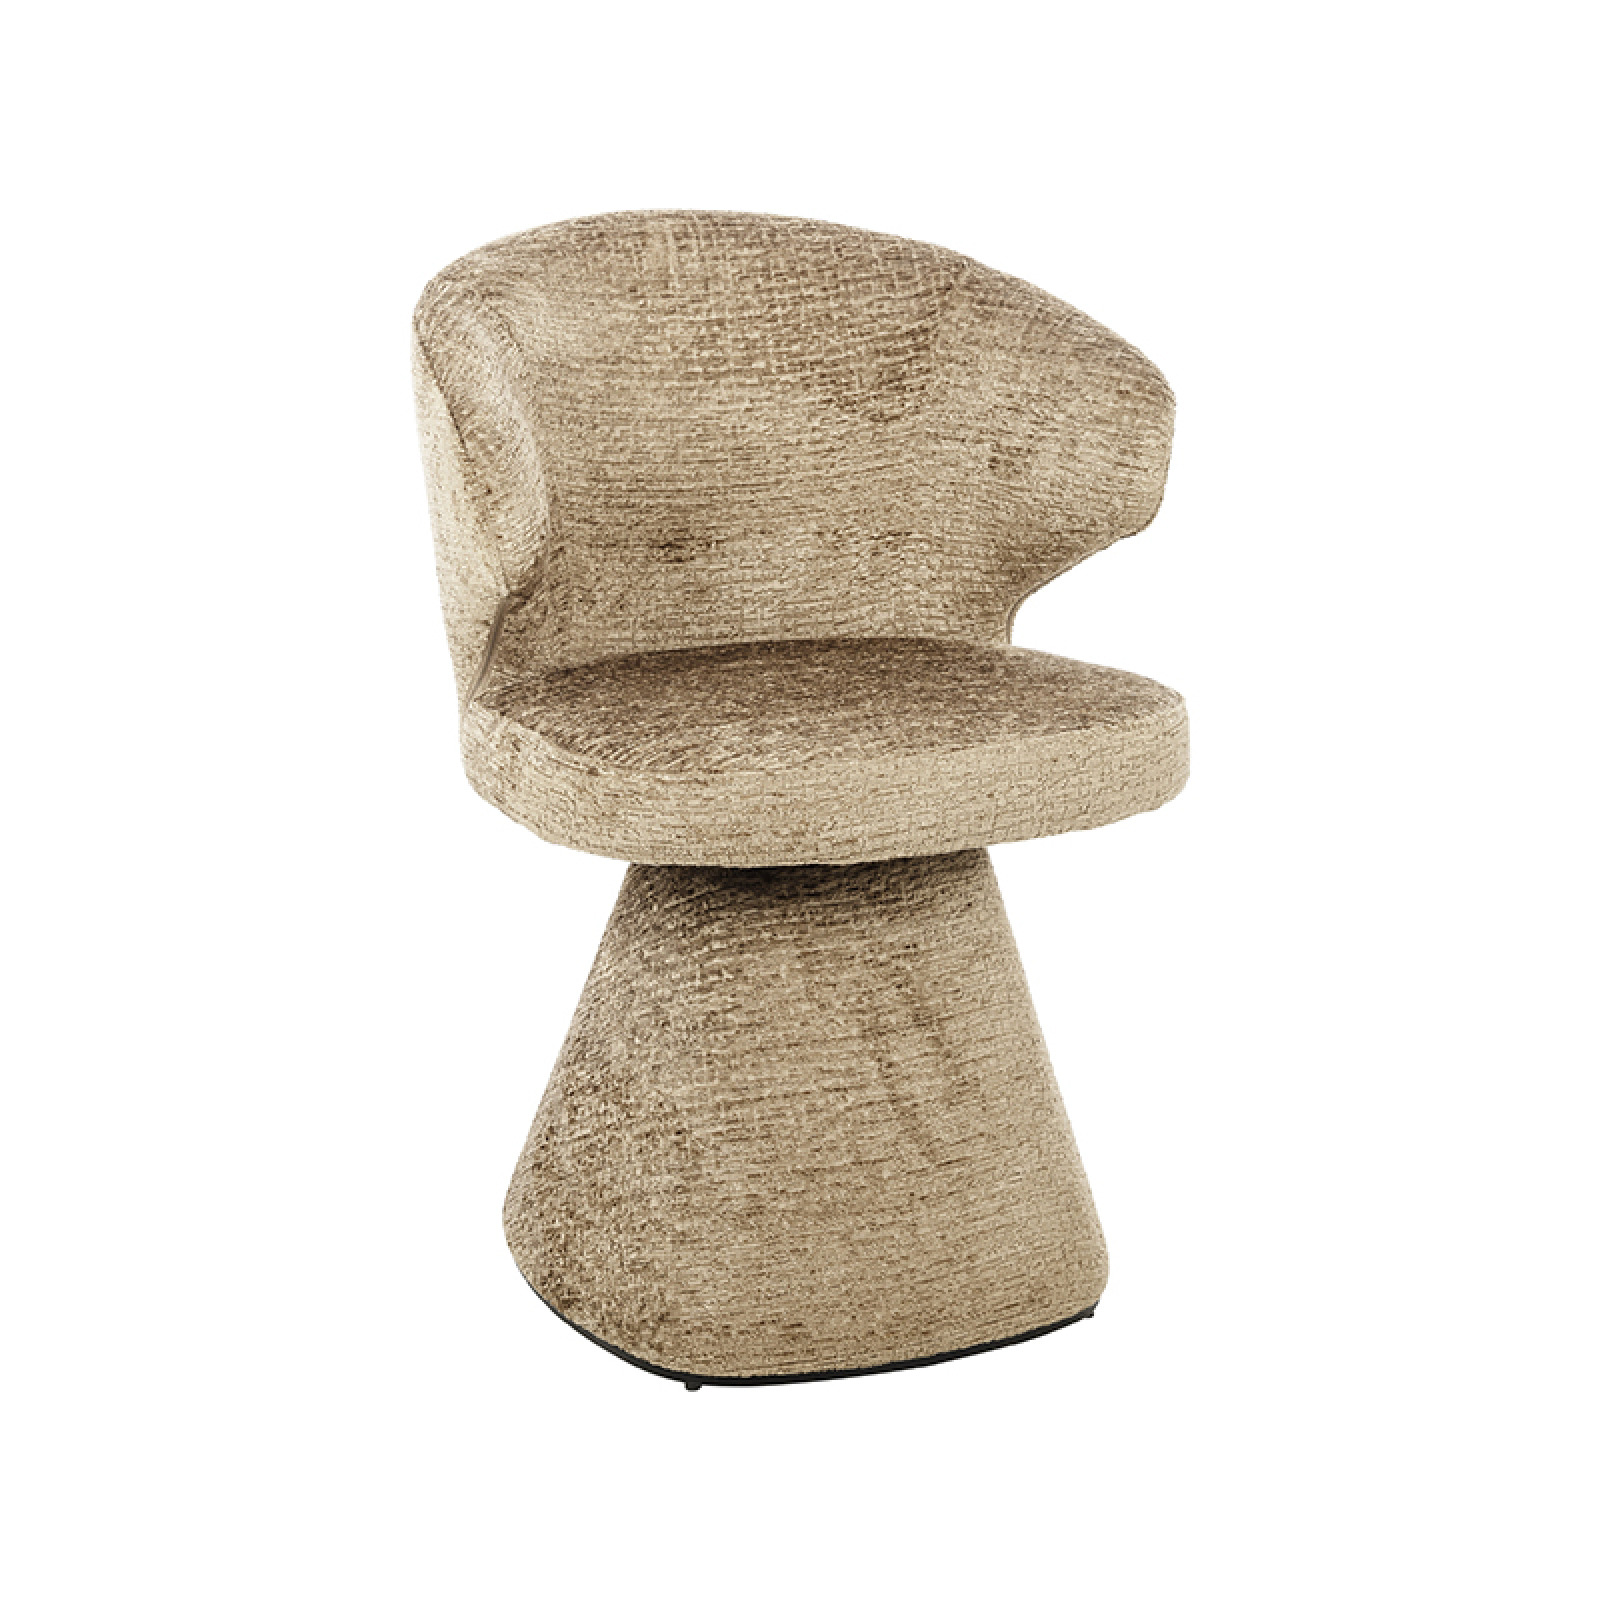 Gatsbi Desert chair